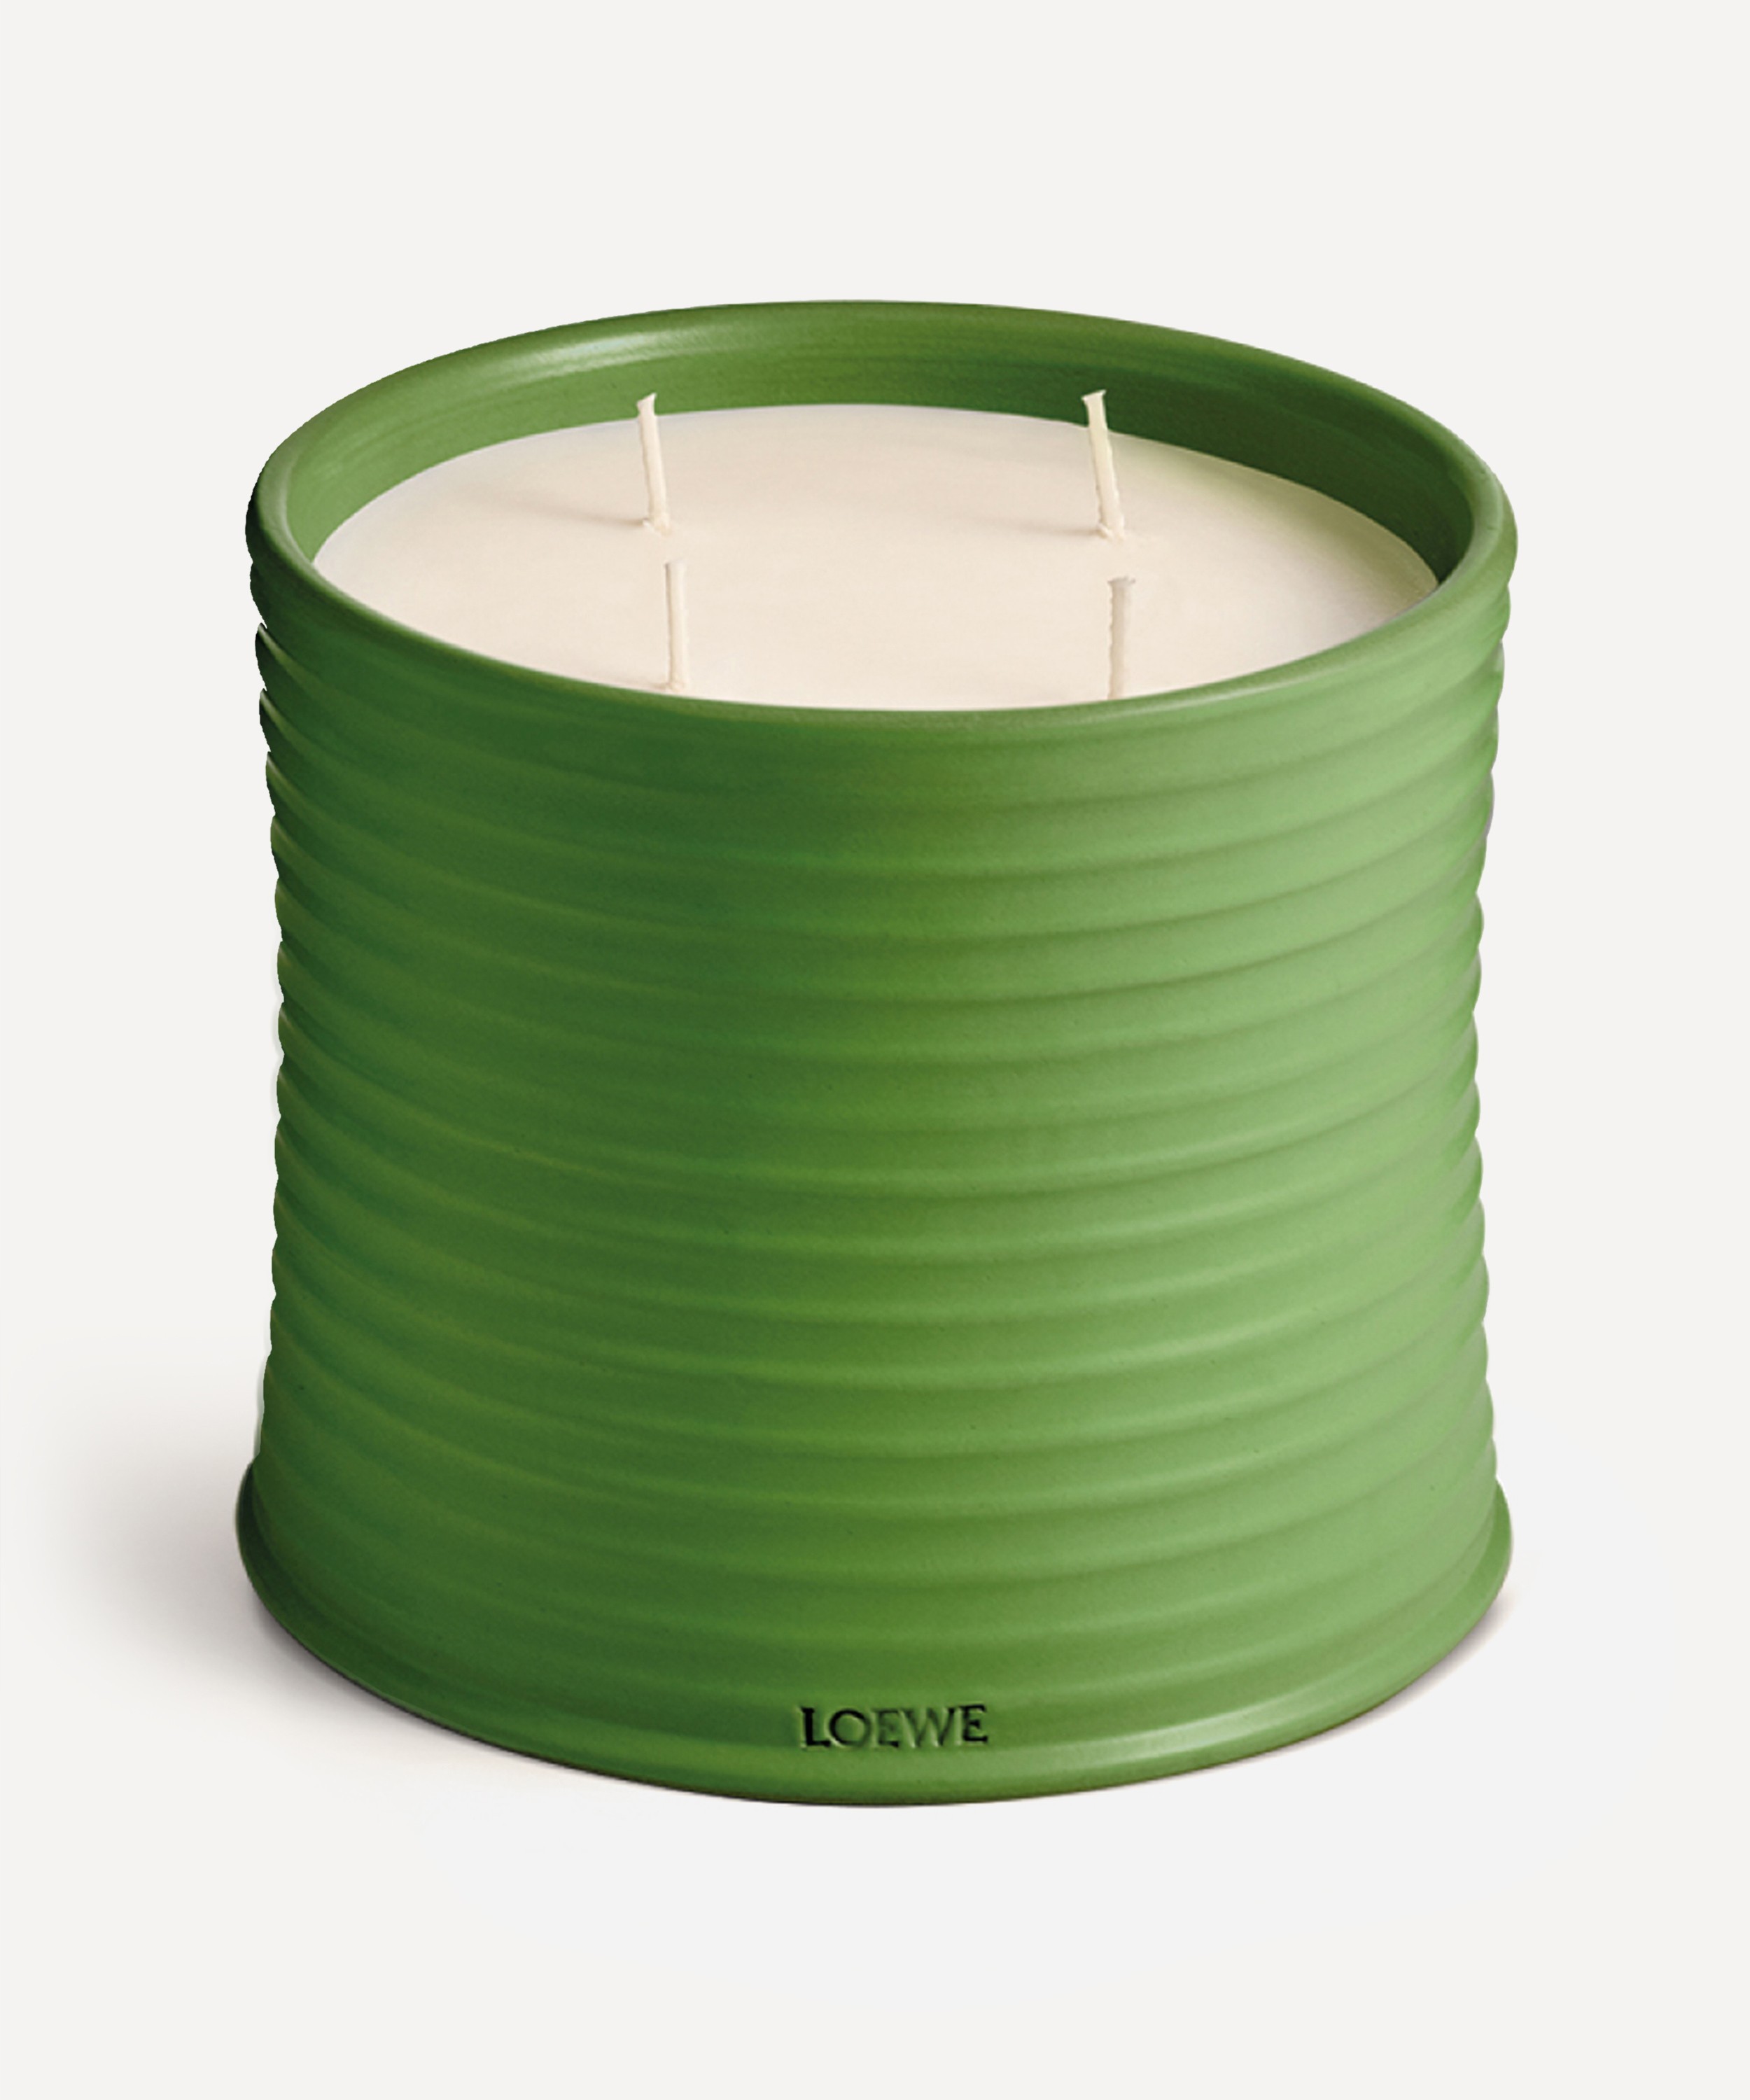 Loewe - Large Luscious Pea Candle 2120g image number 0